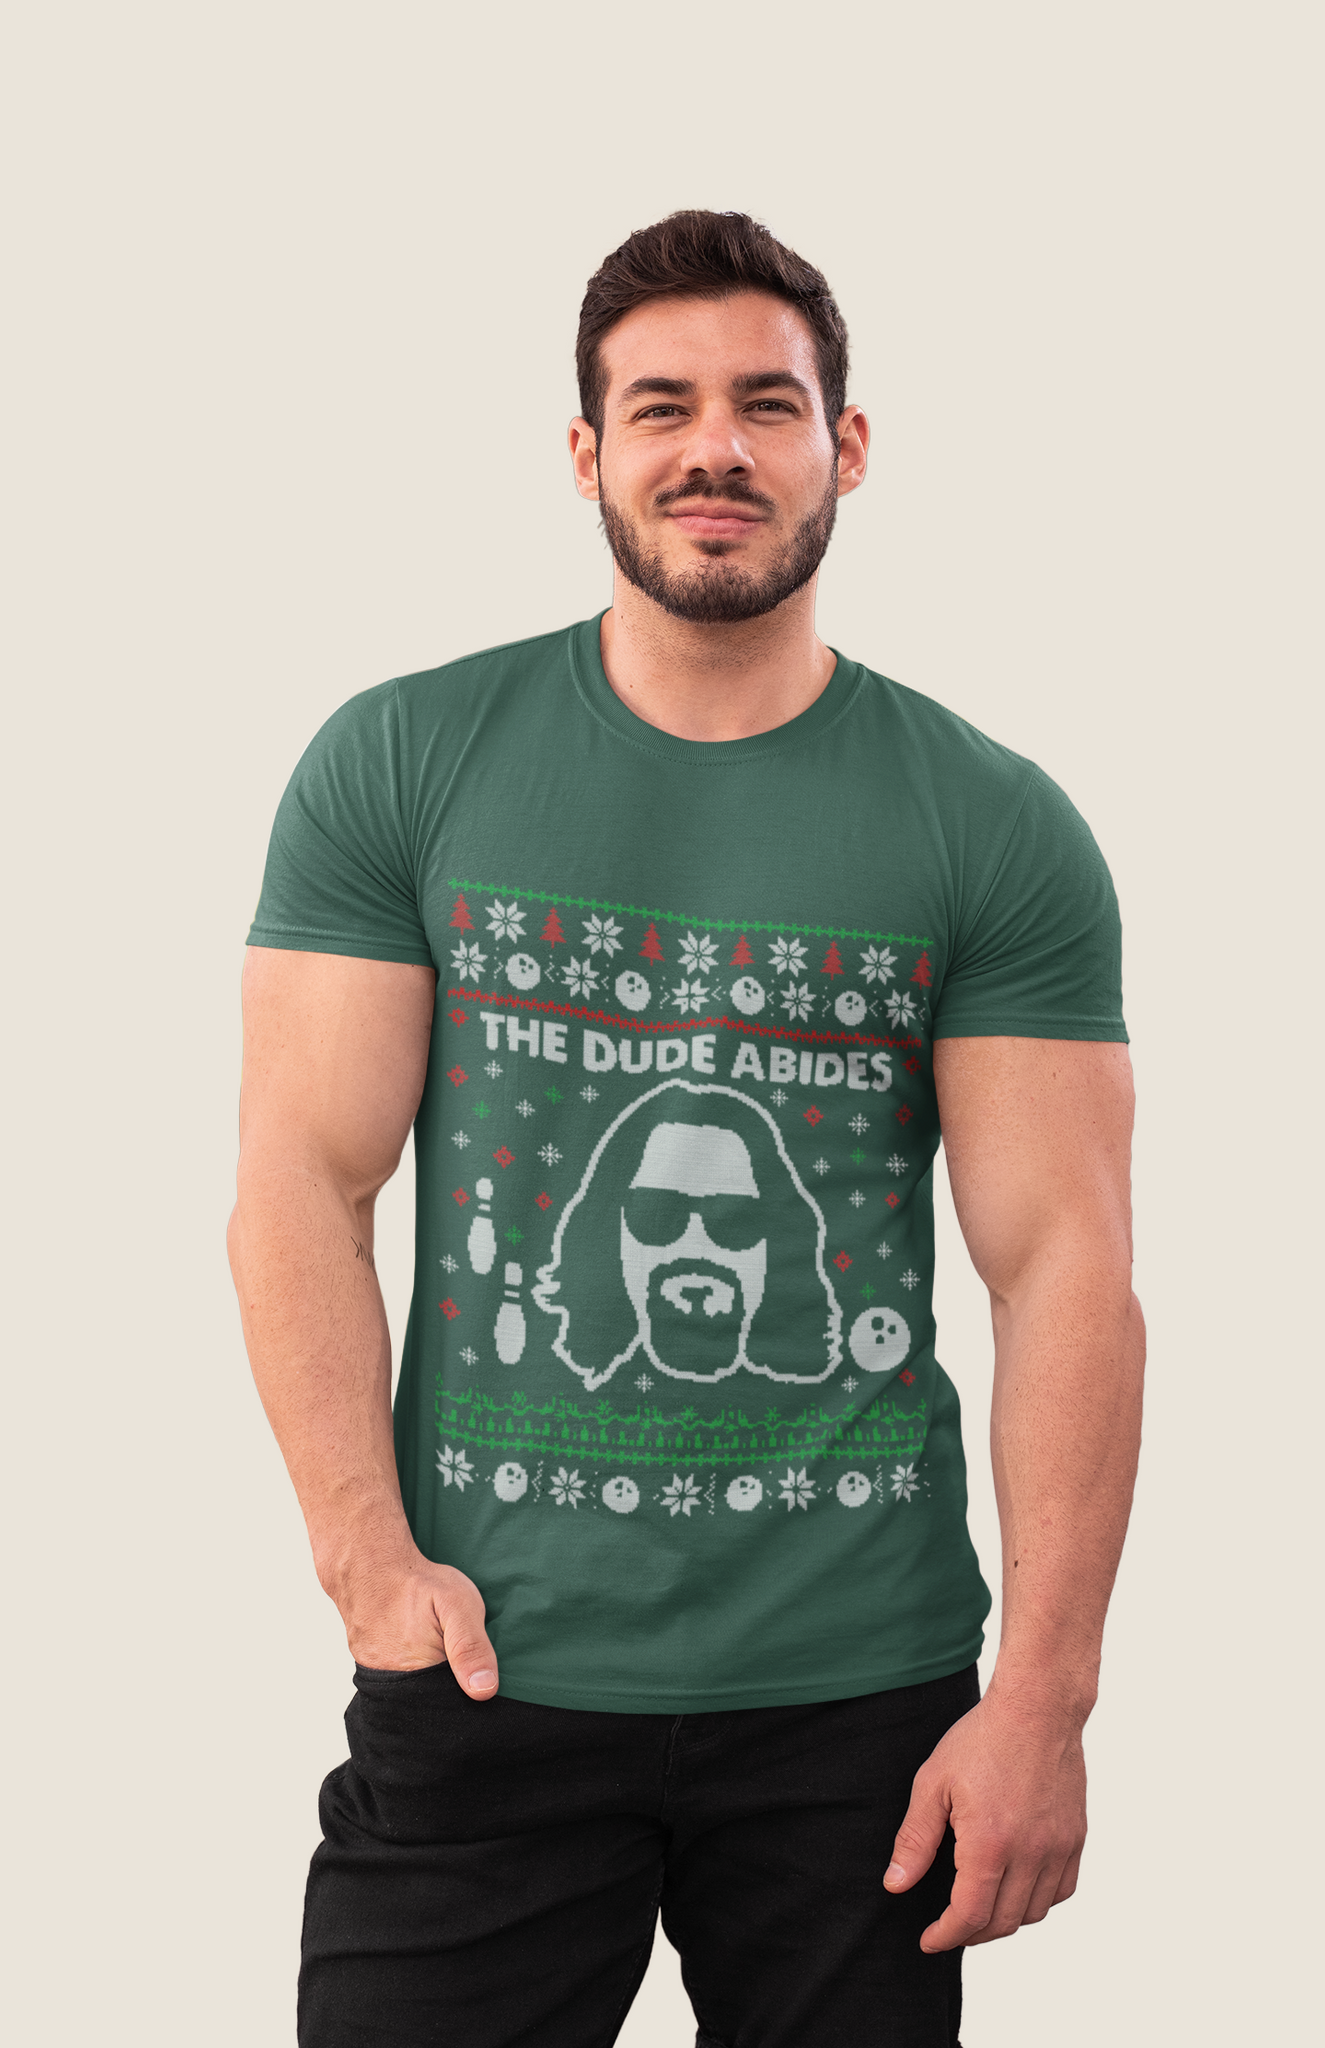 The Big Lebowski Ugly Sweater T Shirt, The Dude Abides Tshirt, The Dude T Shirt, Christmas Gift